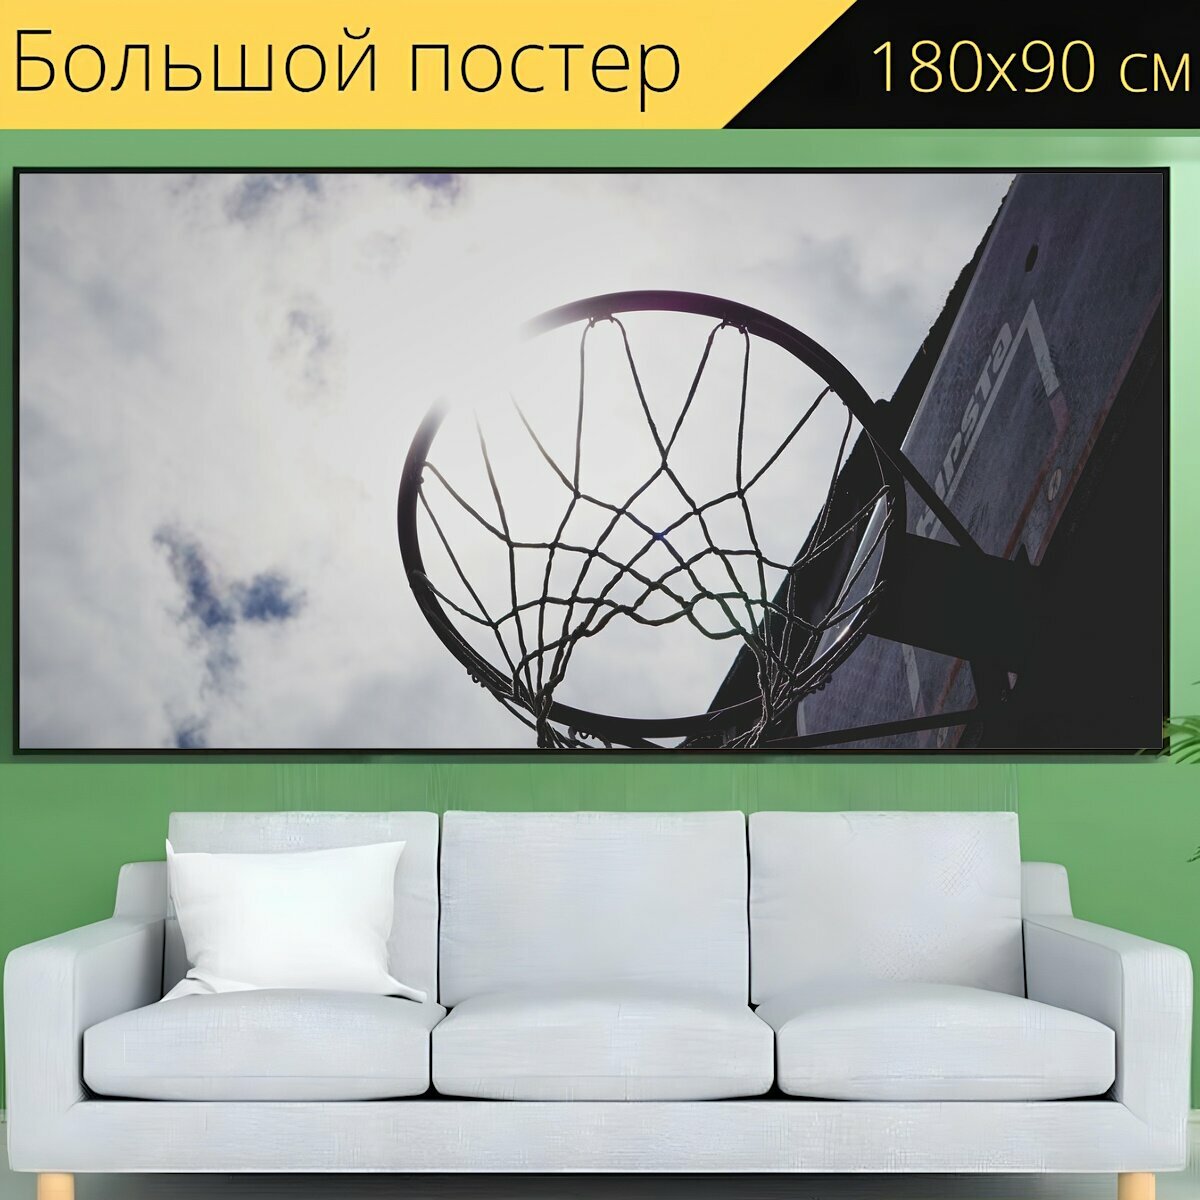 Большой постер "Баскетбол, корт, спорт" 180 x 90 см. для интерьера